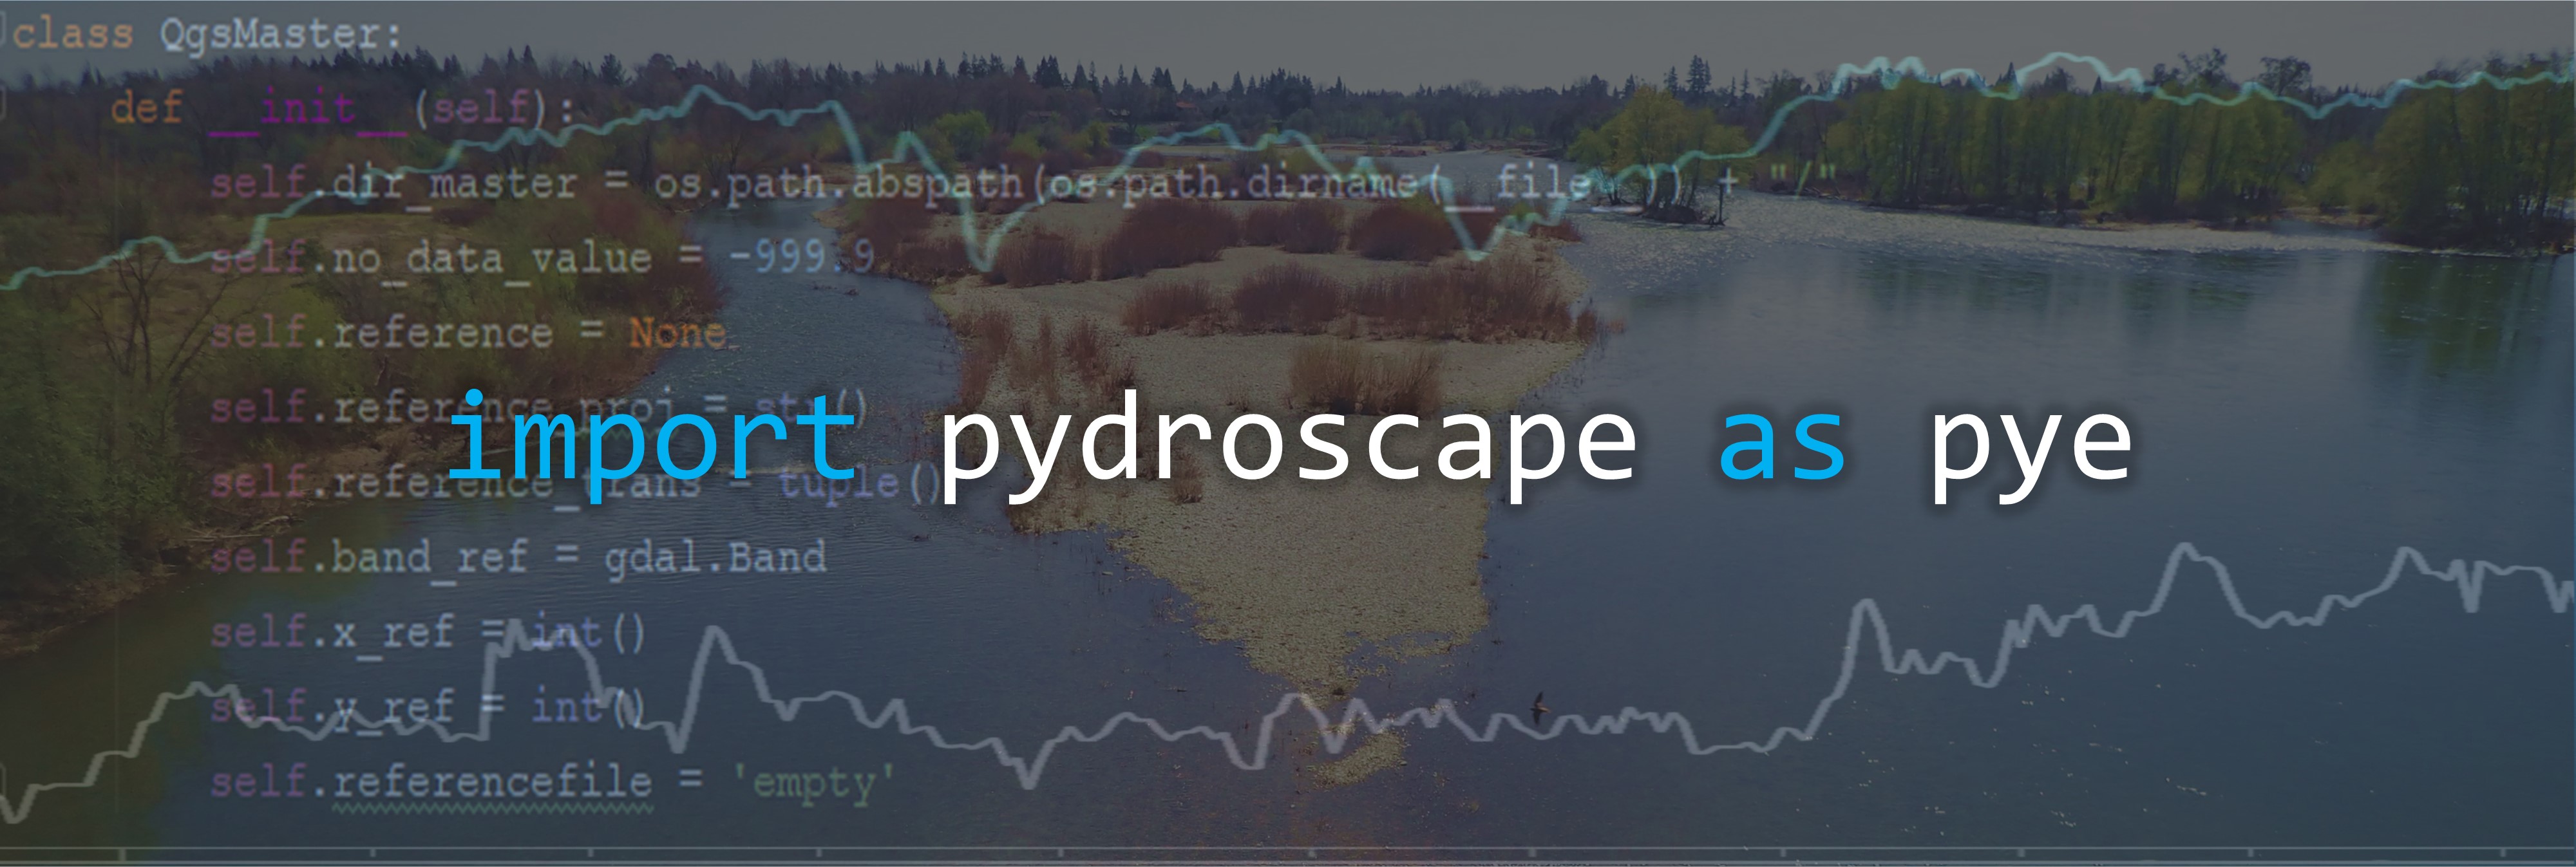 PYDROSCAPE - The baseline Python package